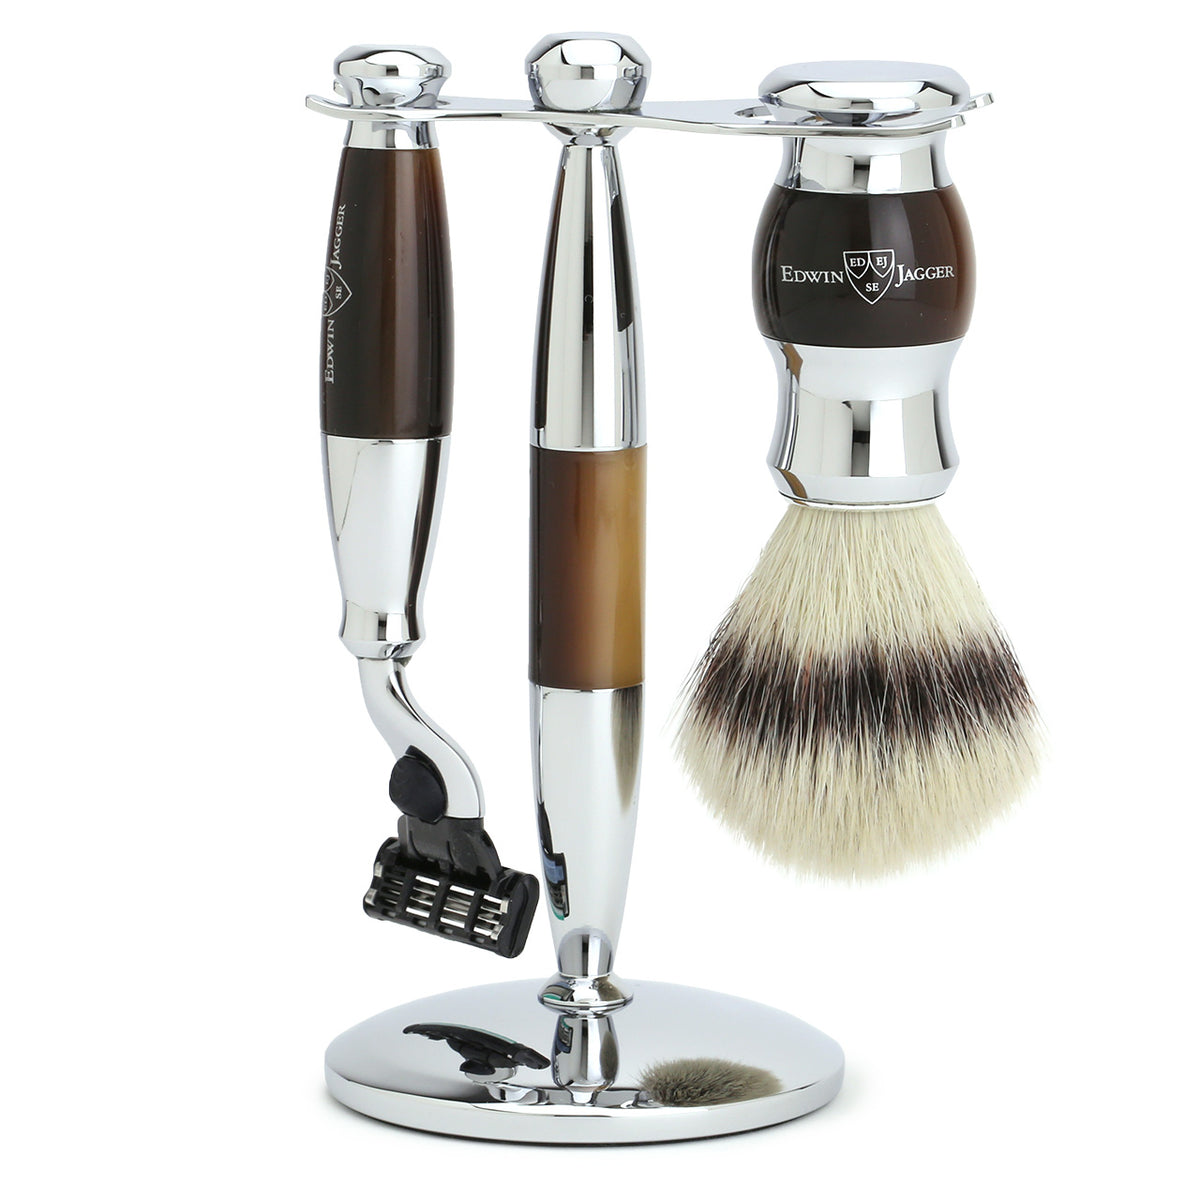 Edwin Jagger Shaving Set with Mach3 Razor, Shaving Brush &amp; Stand - Imitation Light Horn